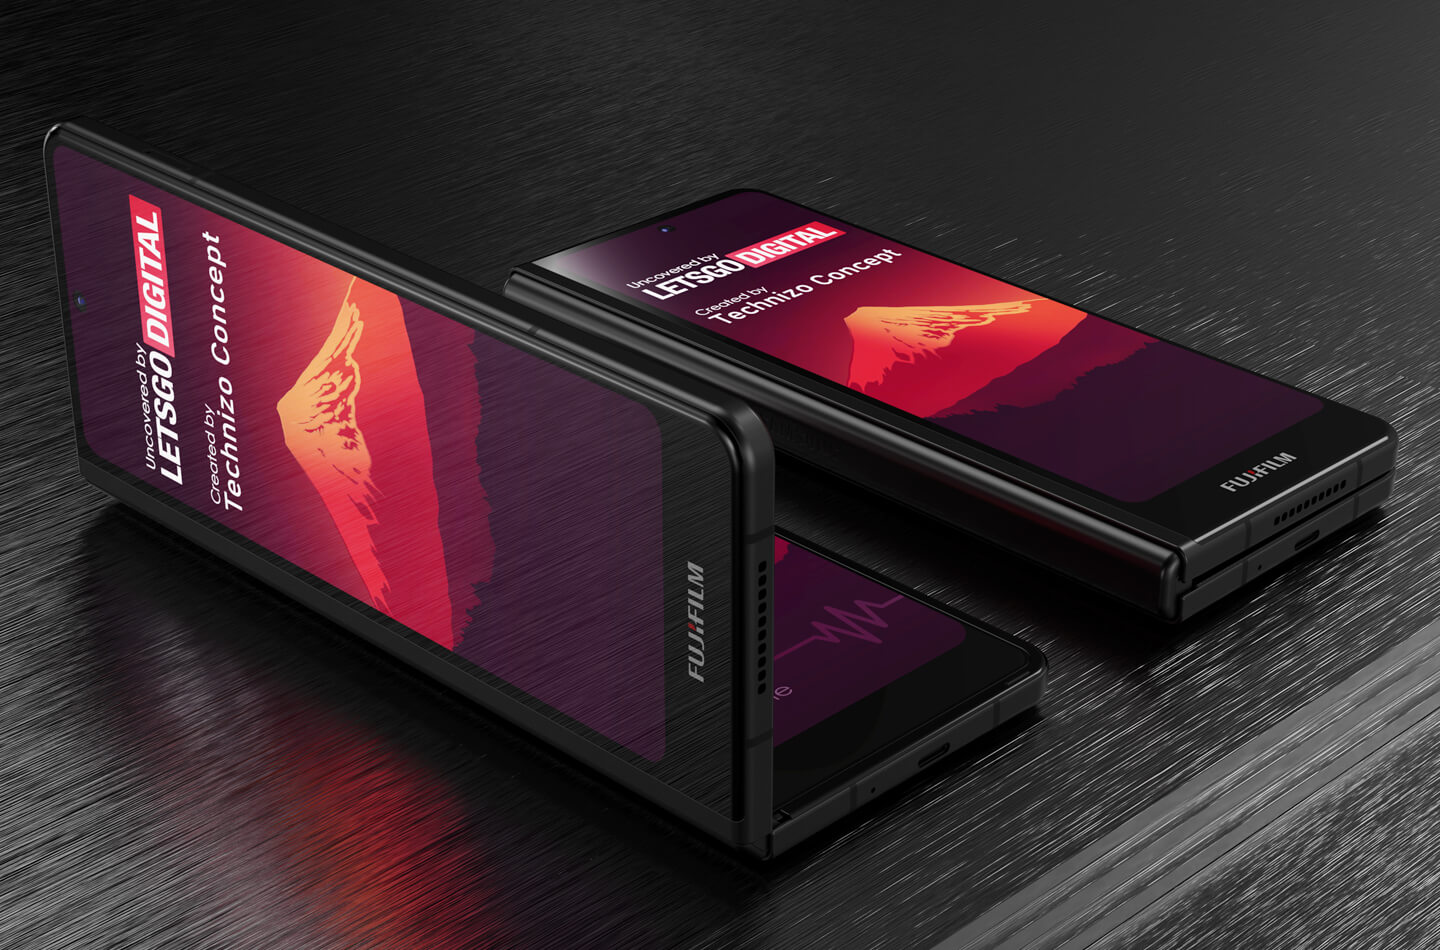 Galaxy Fold smartphone